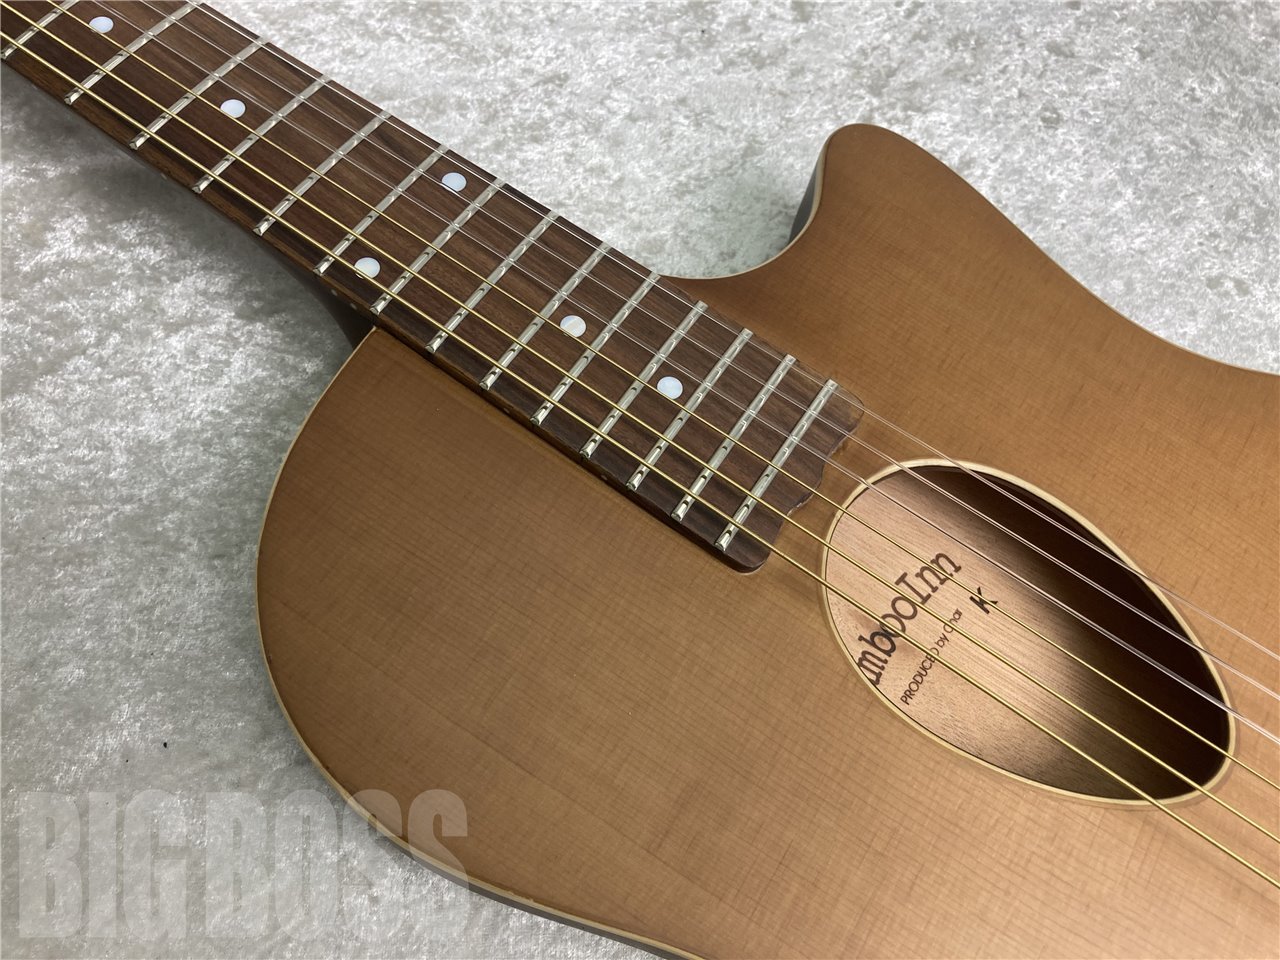 BambooInn BambooInn-C by charアコースティックギター - 楽器/器材